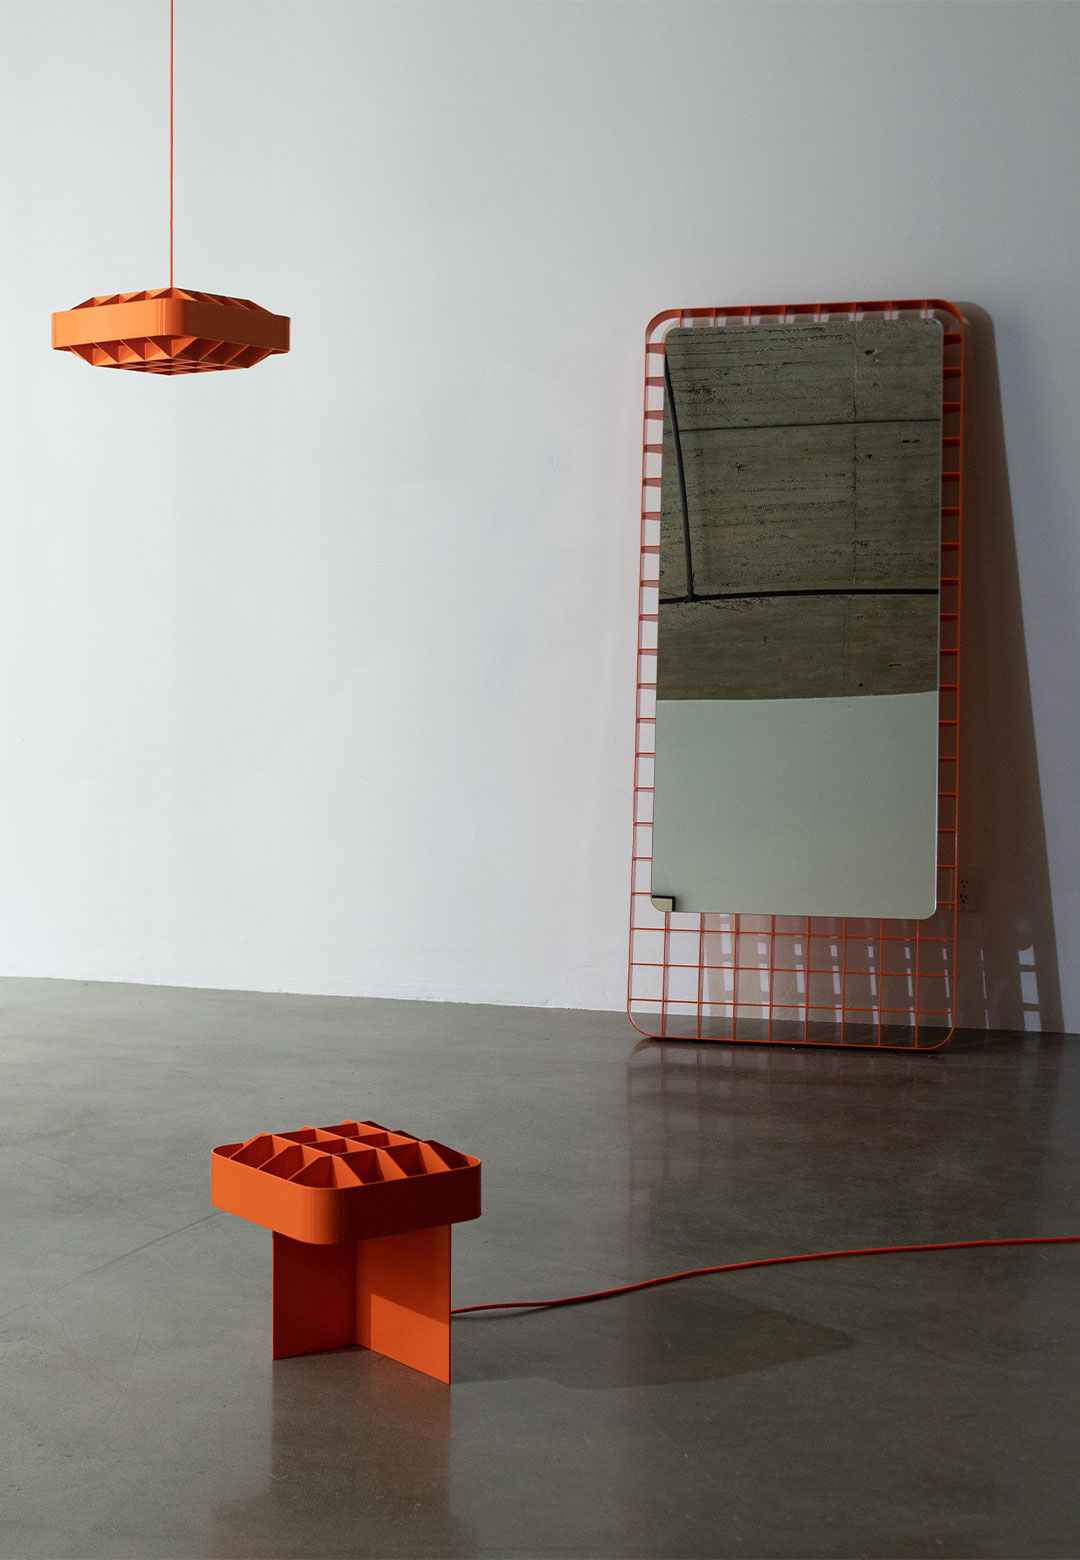 Will Choui reinterprets 1970s Brutalism within contemporary furniture designs